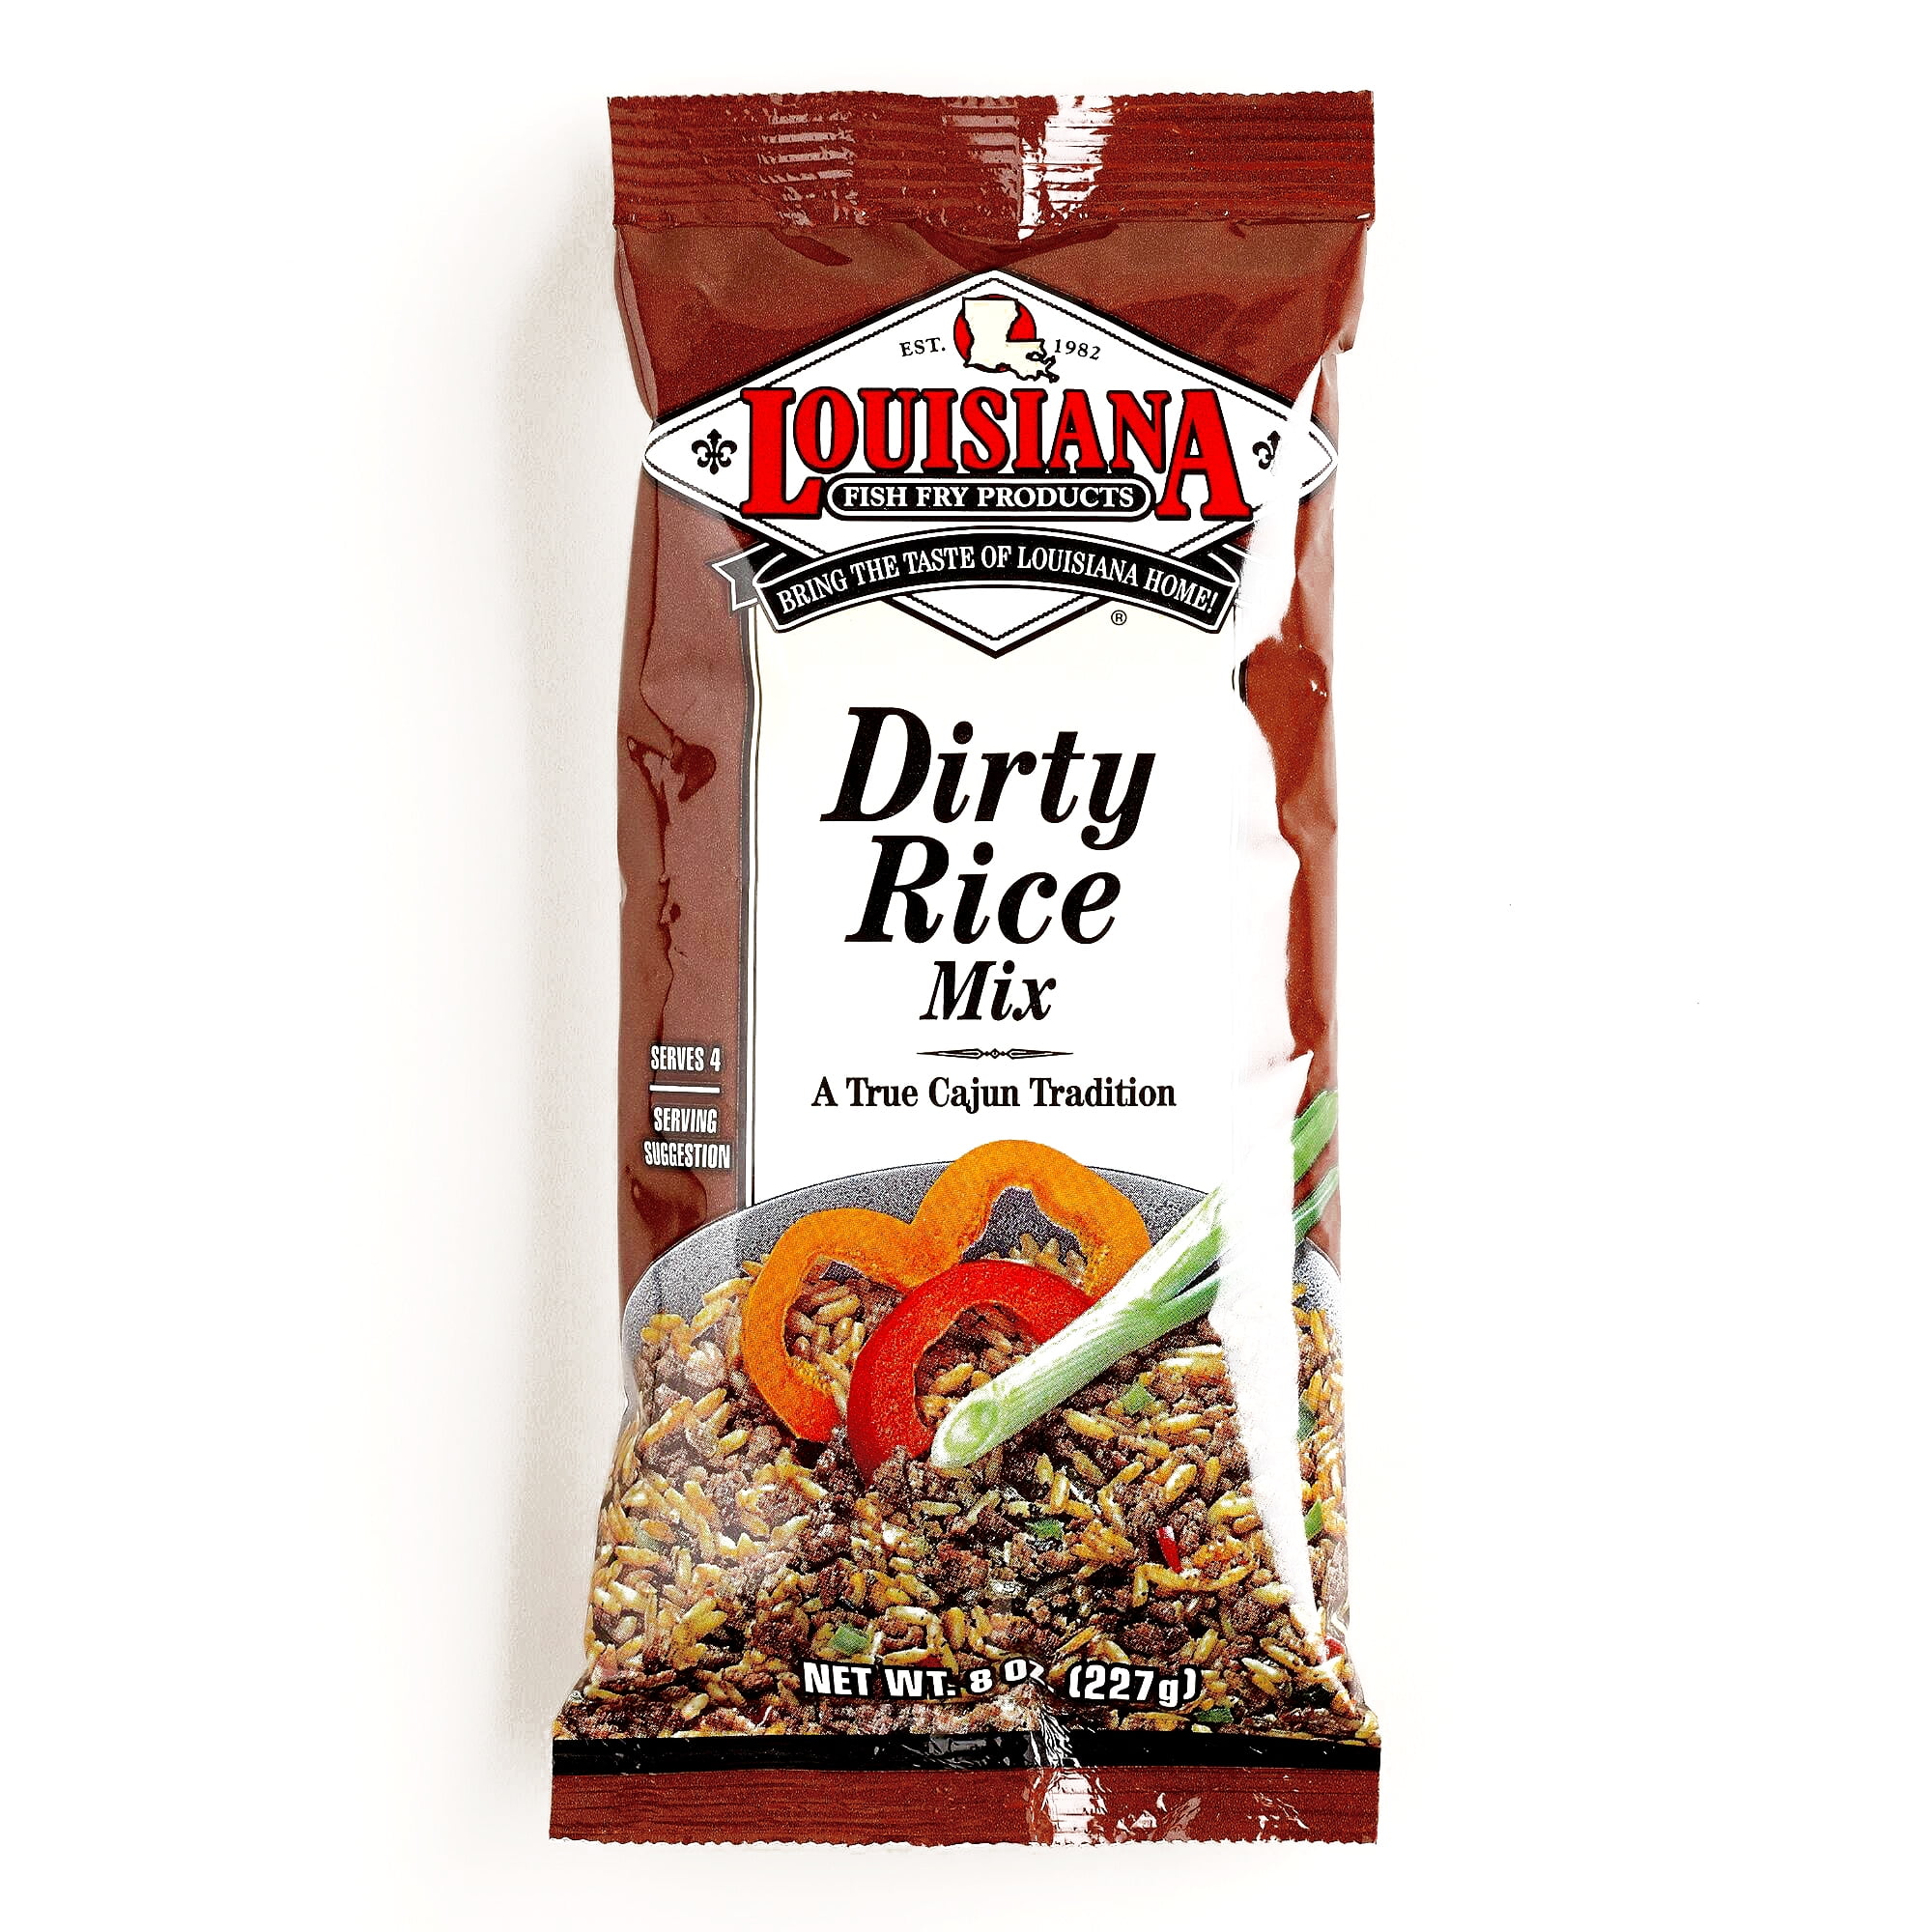 Louisiana Fish Fry Dirty Rice MIx 8 oz - Pack of 2 